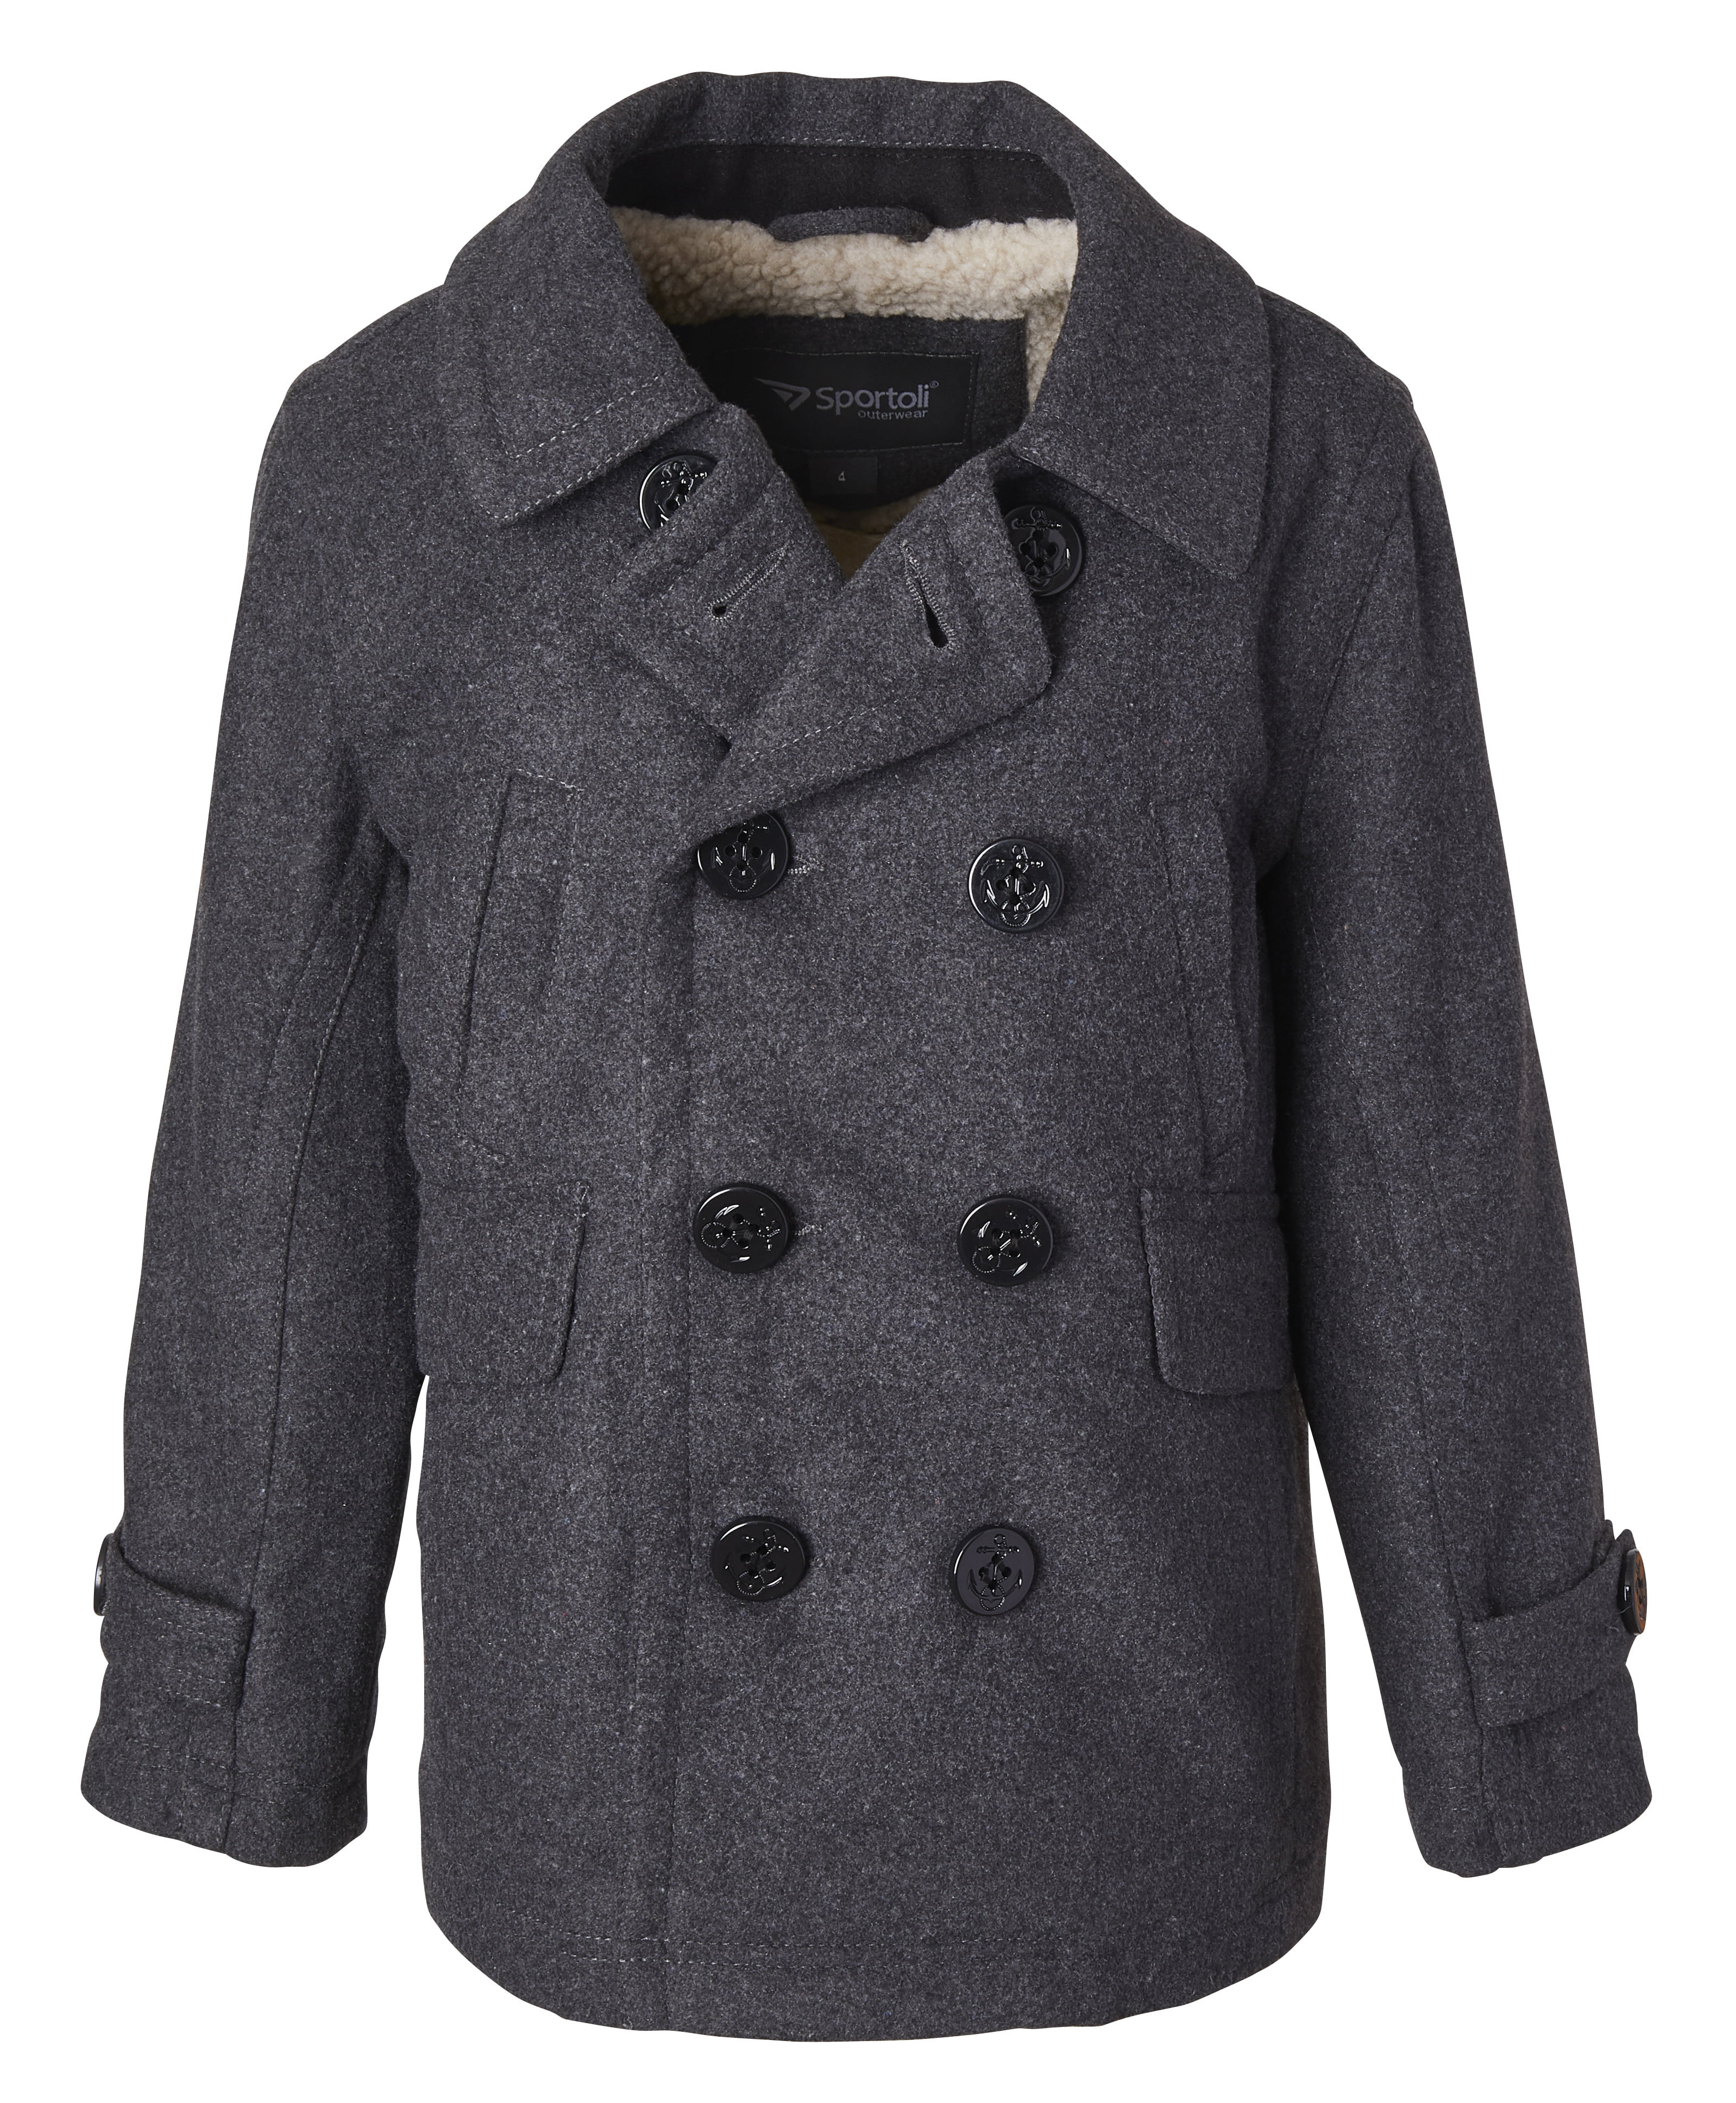 Sportoli Boys/’ Classic Wool Blend Military Winter Dress Pea Coat Peacoat Jacket